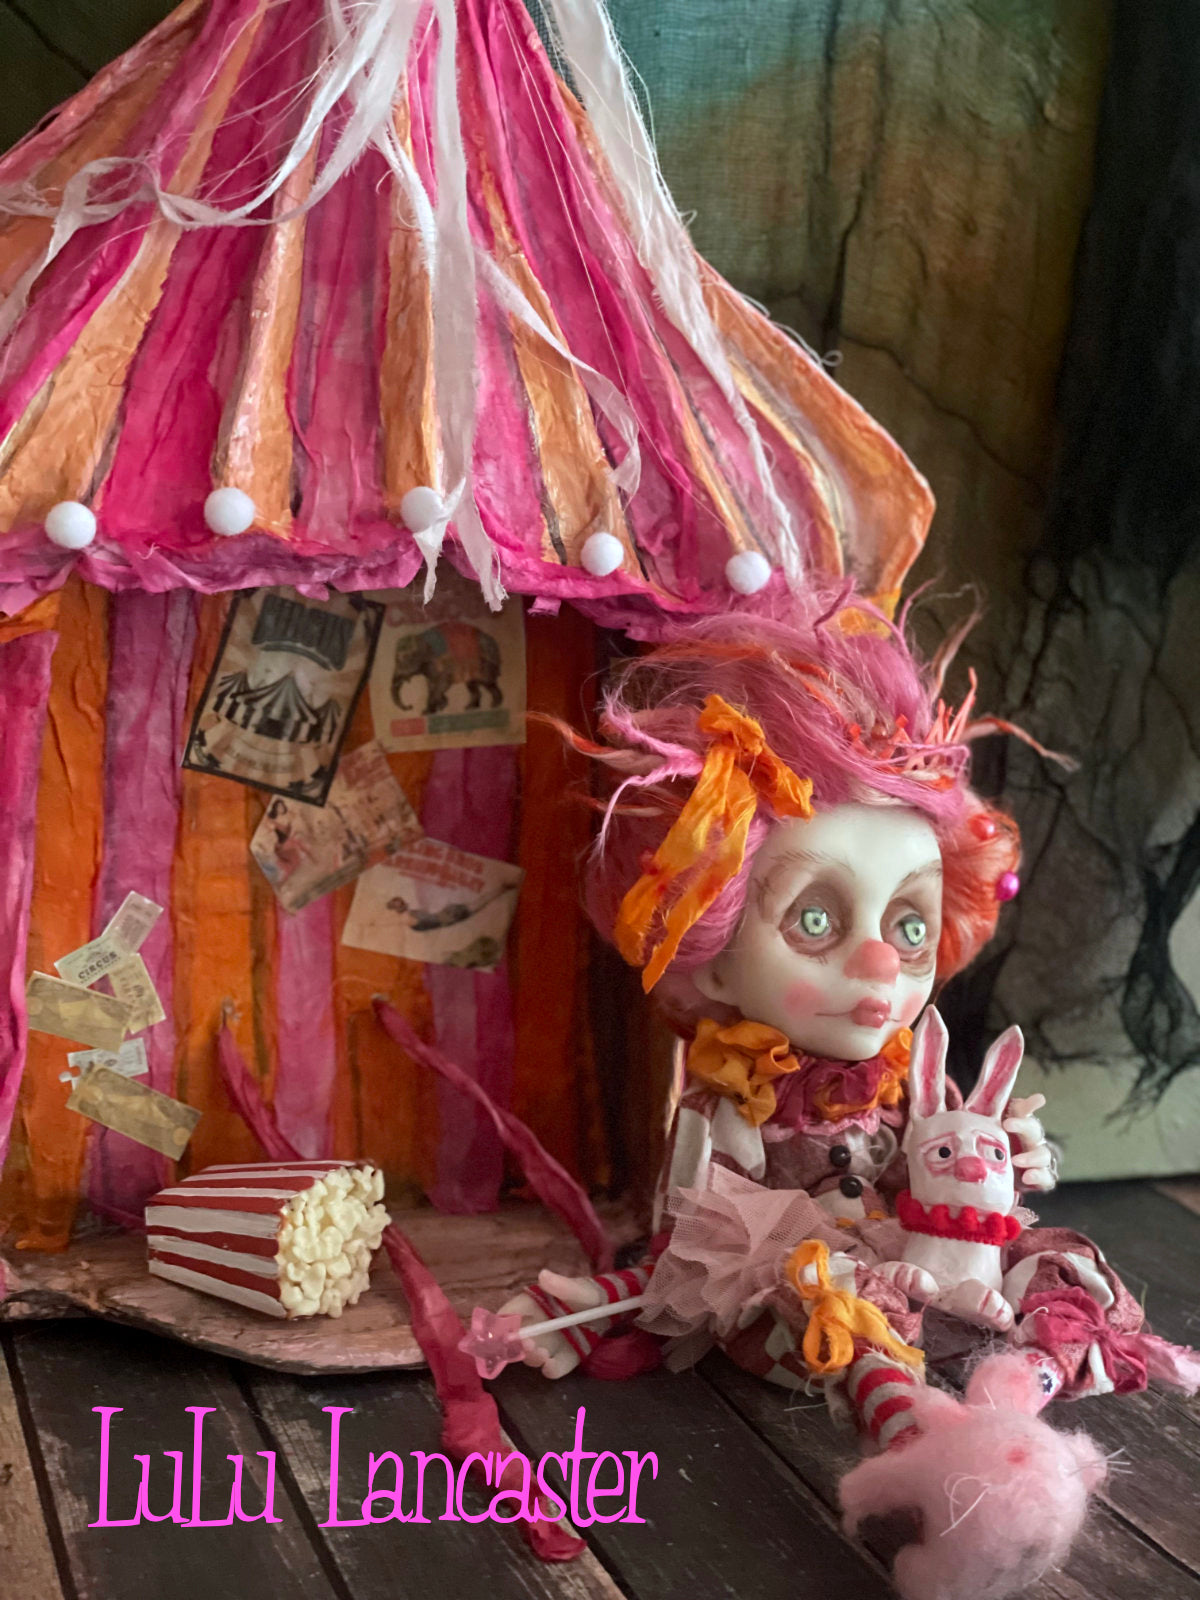 Trinket the Clown in her circus tent Halloween Original LuLu Lancaster Art Doll